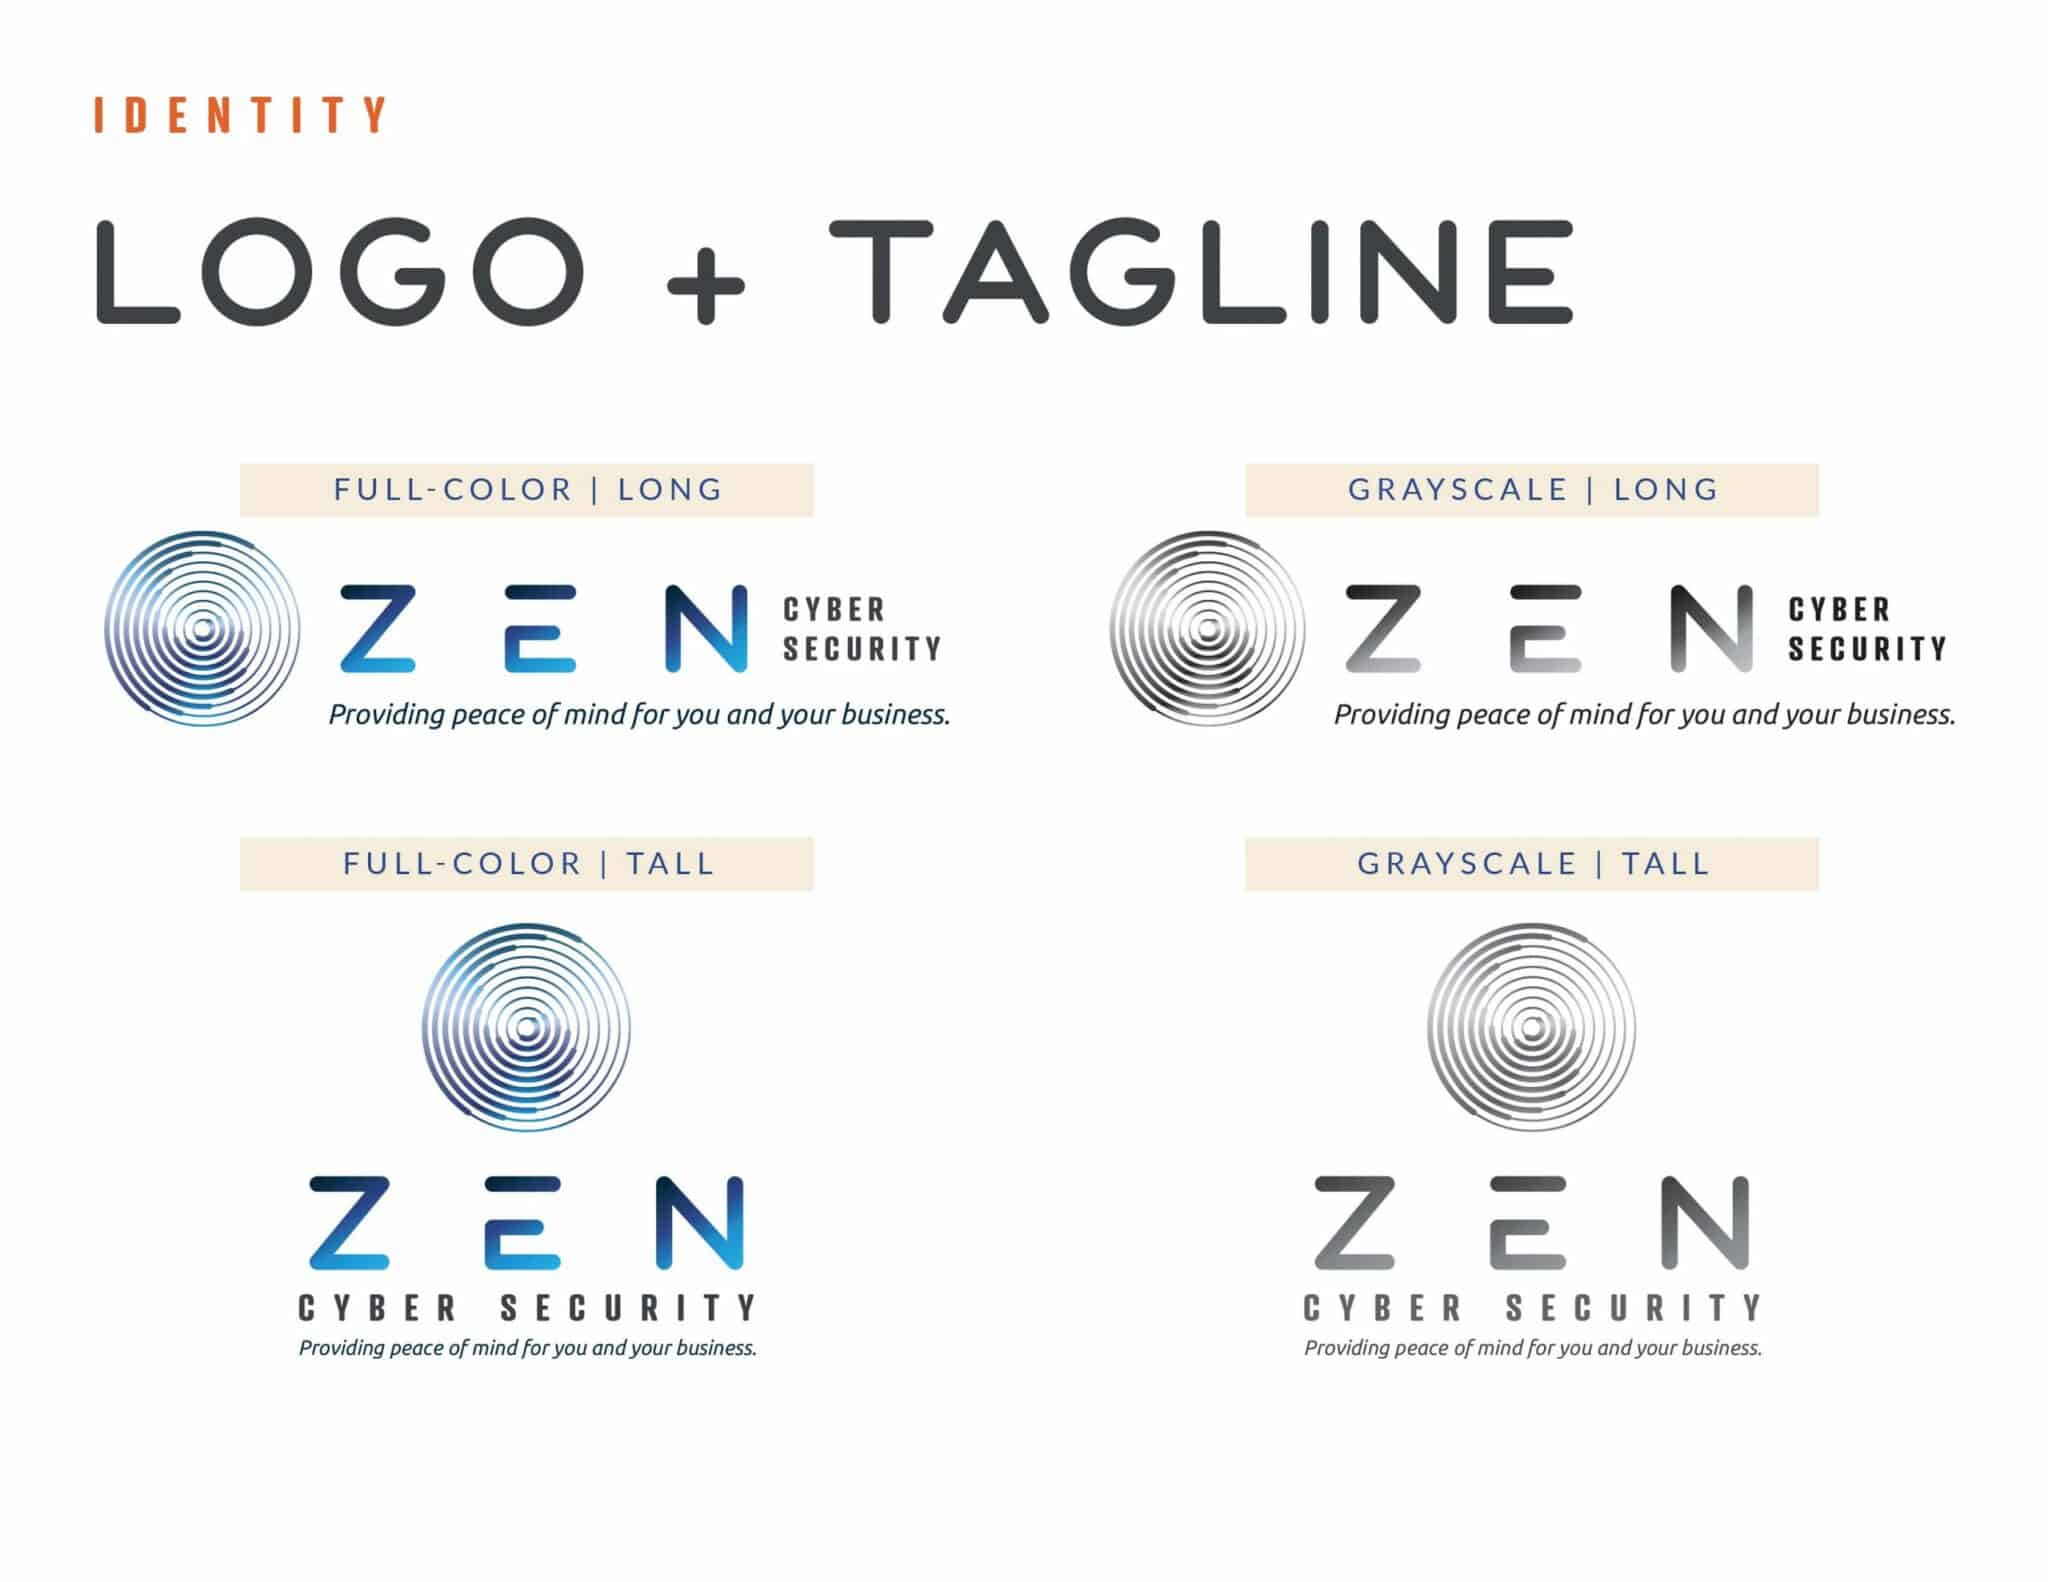 Zen Cyber Security Brand Guide - Logo